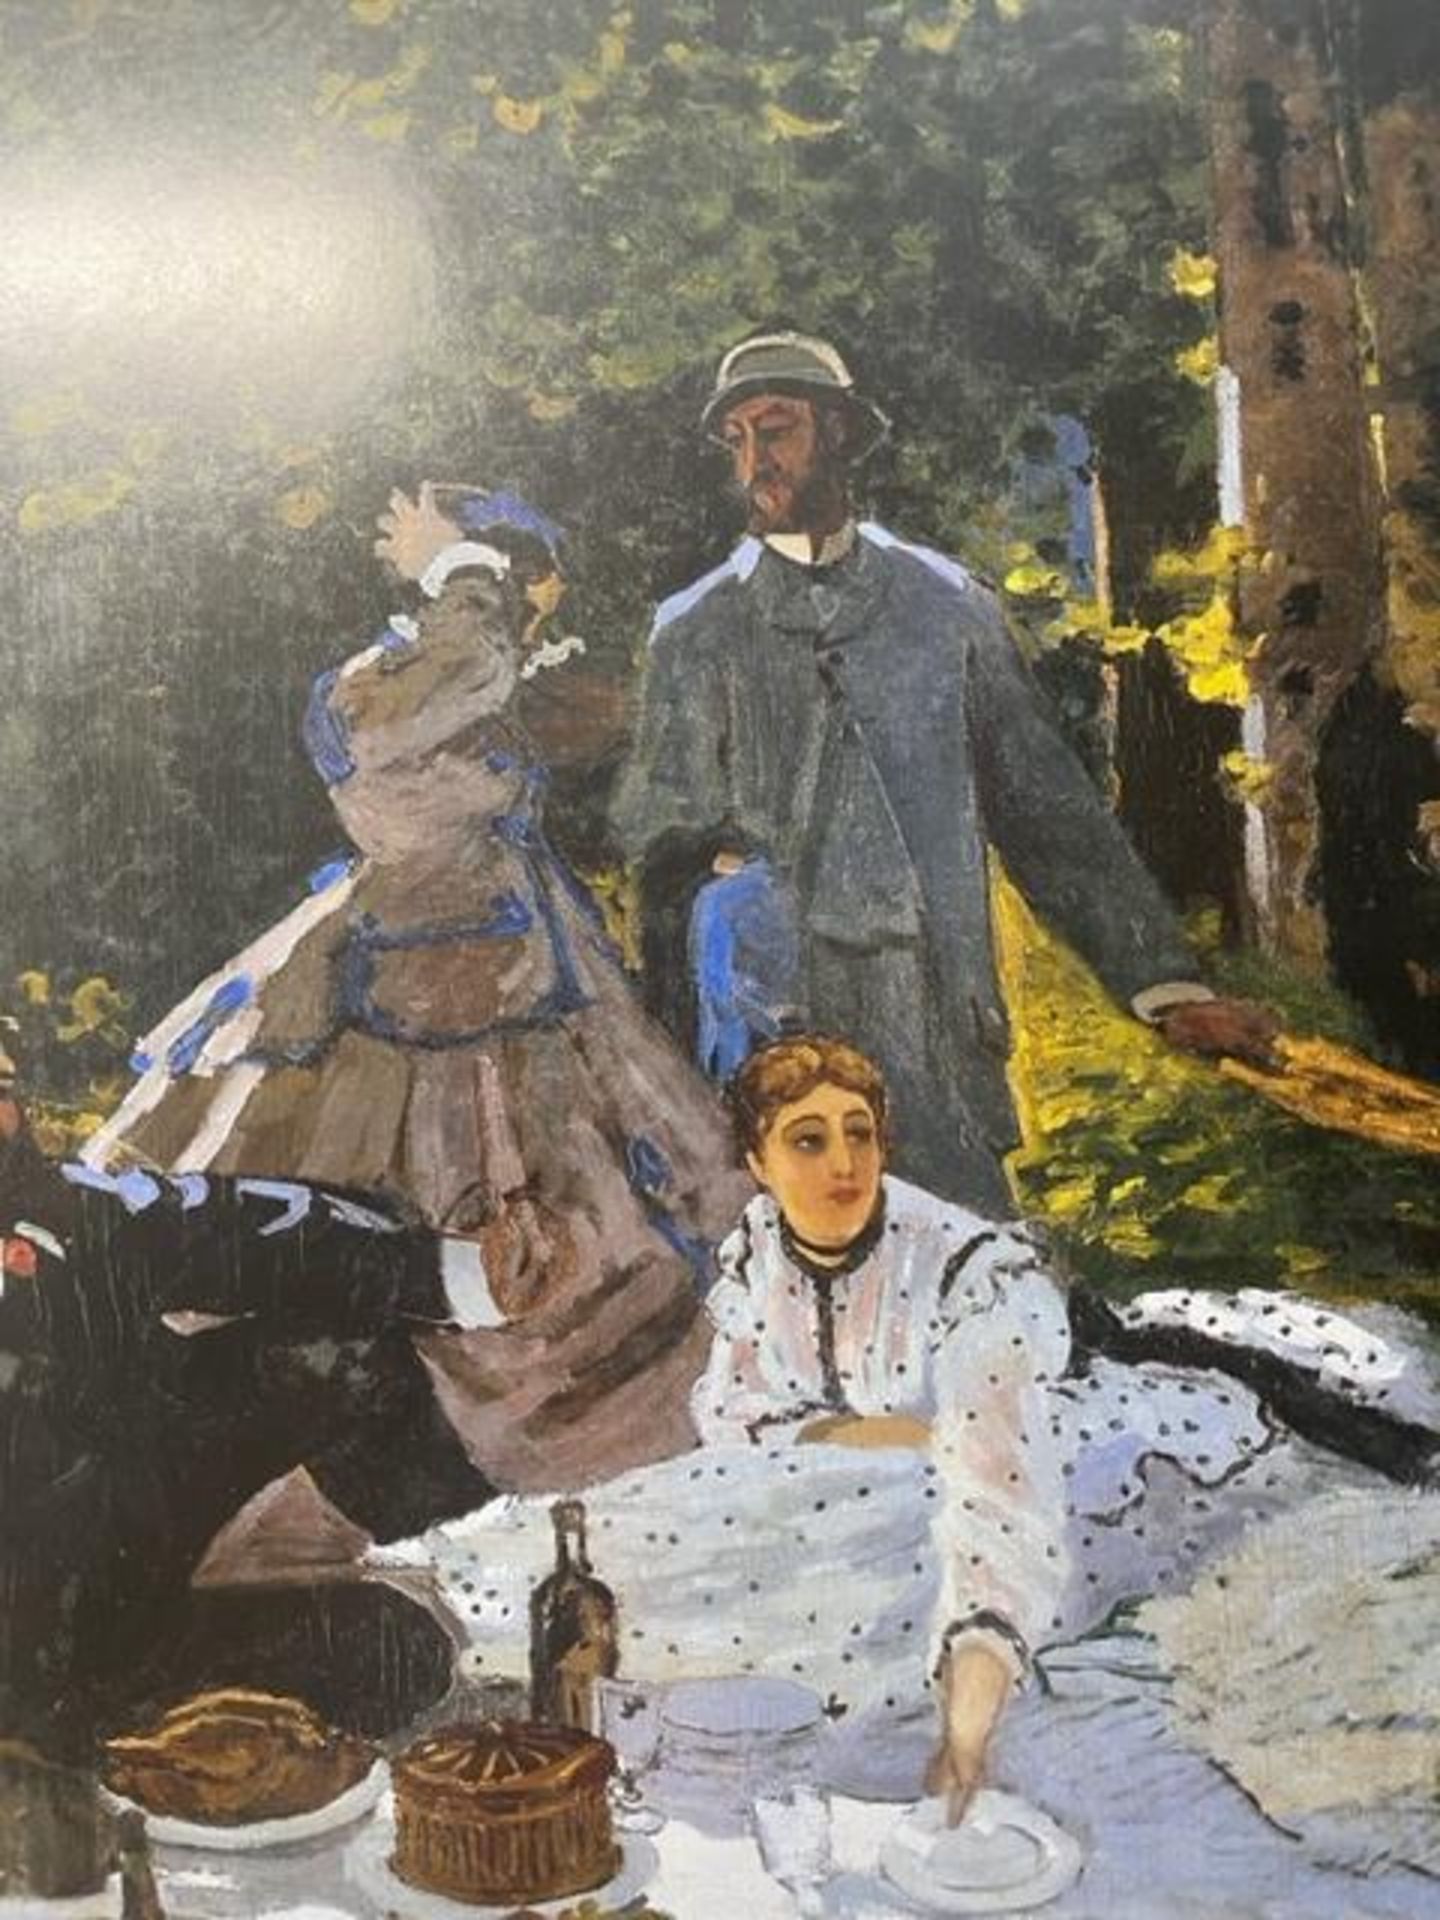 Claude Monet "Luncheon on the Grass" Print.